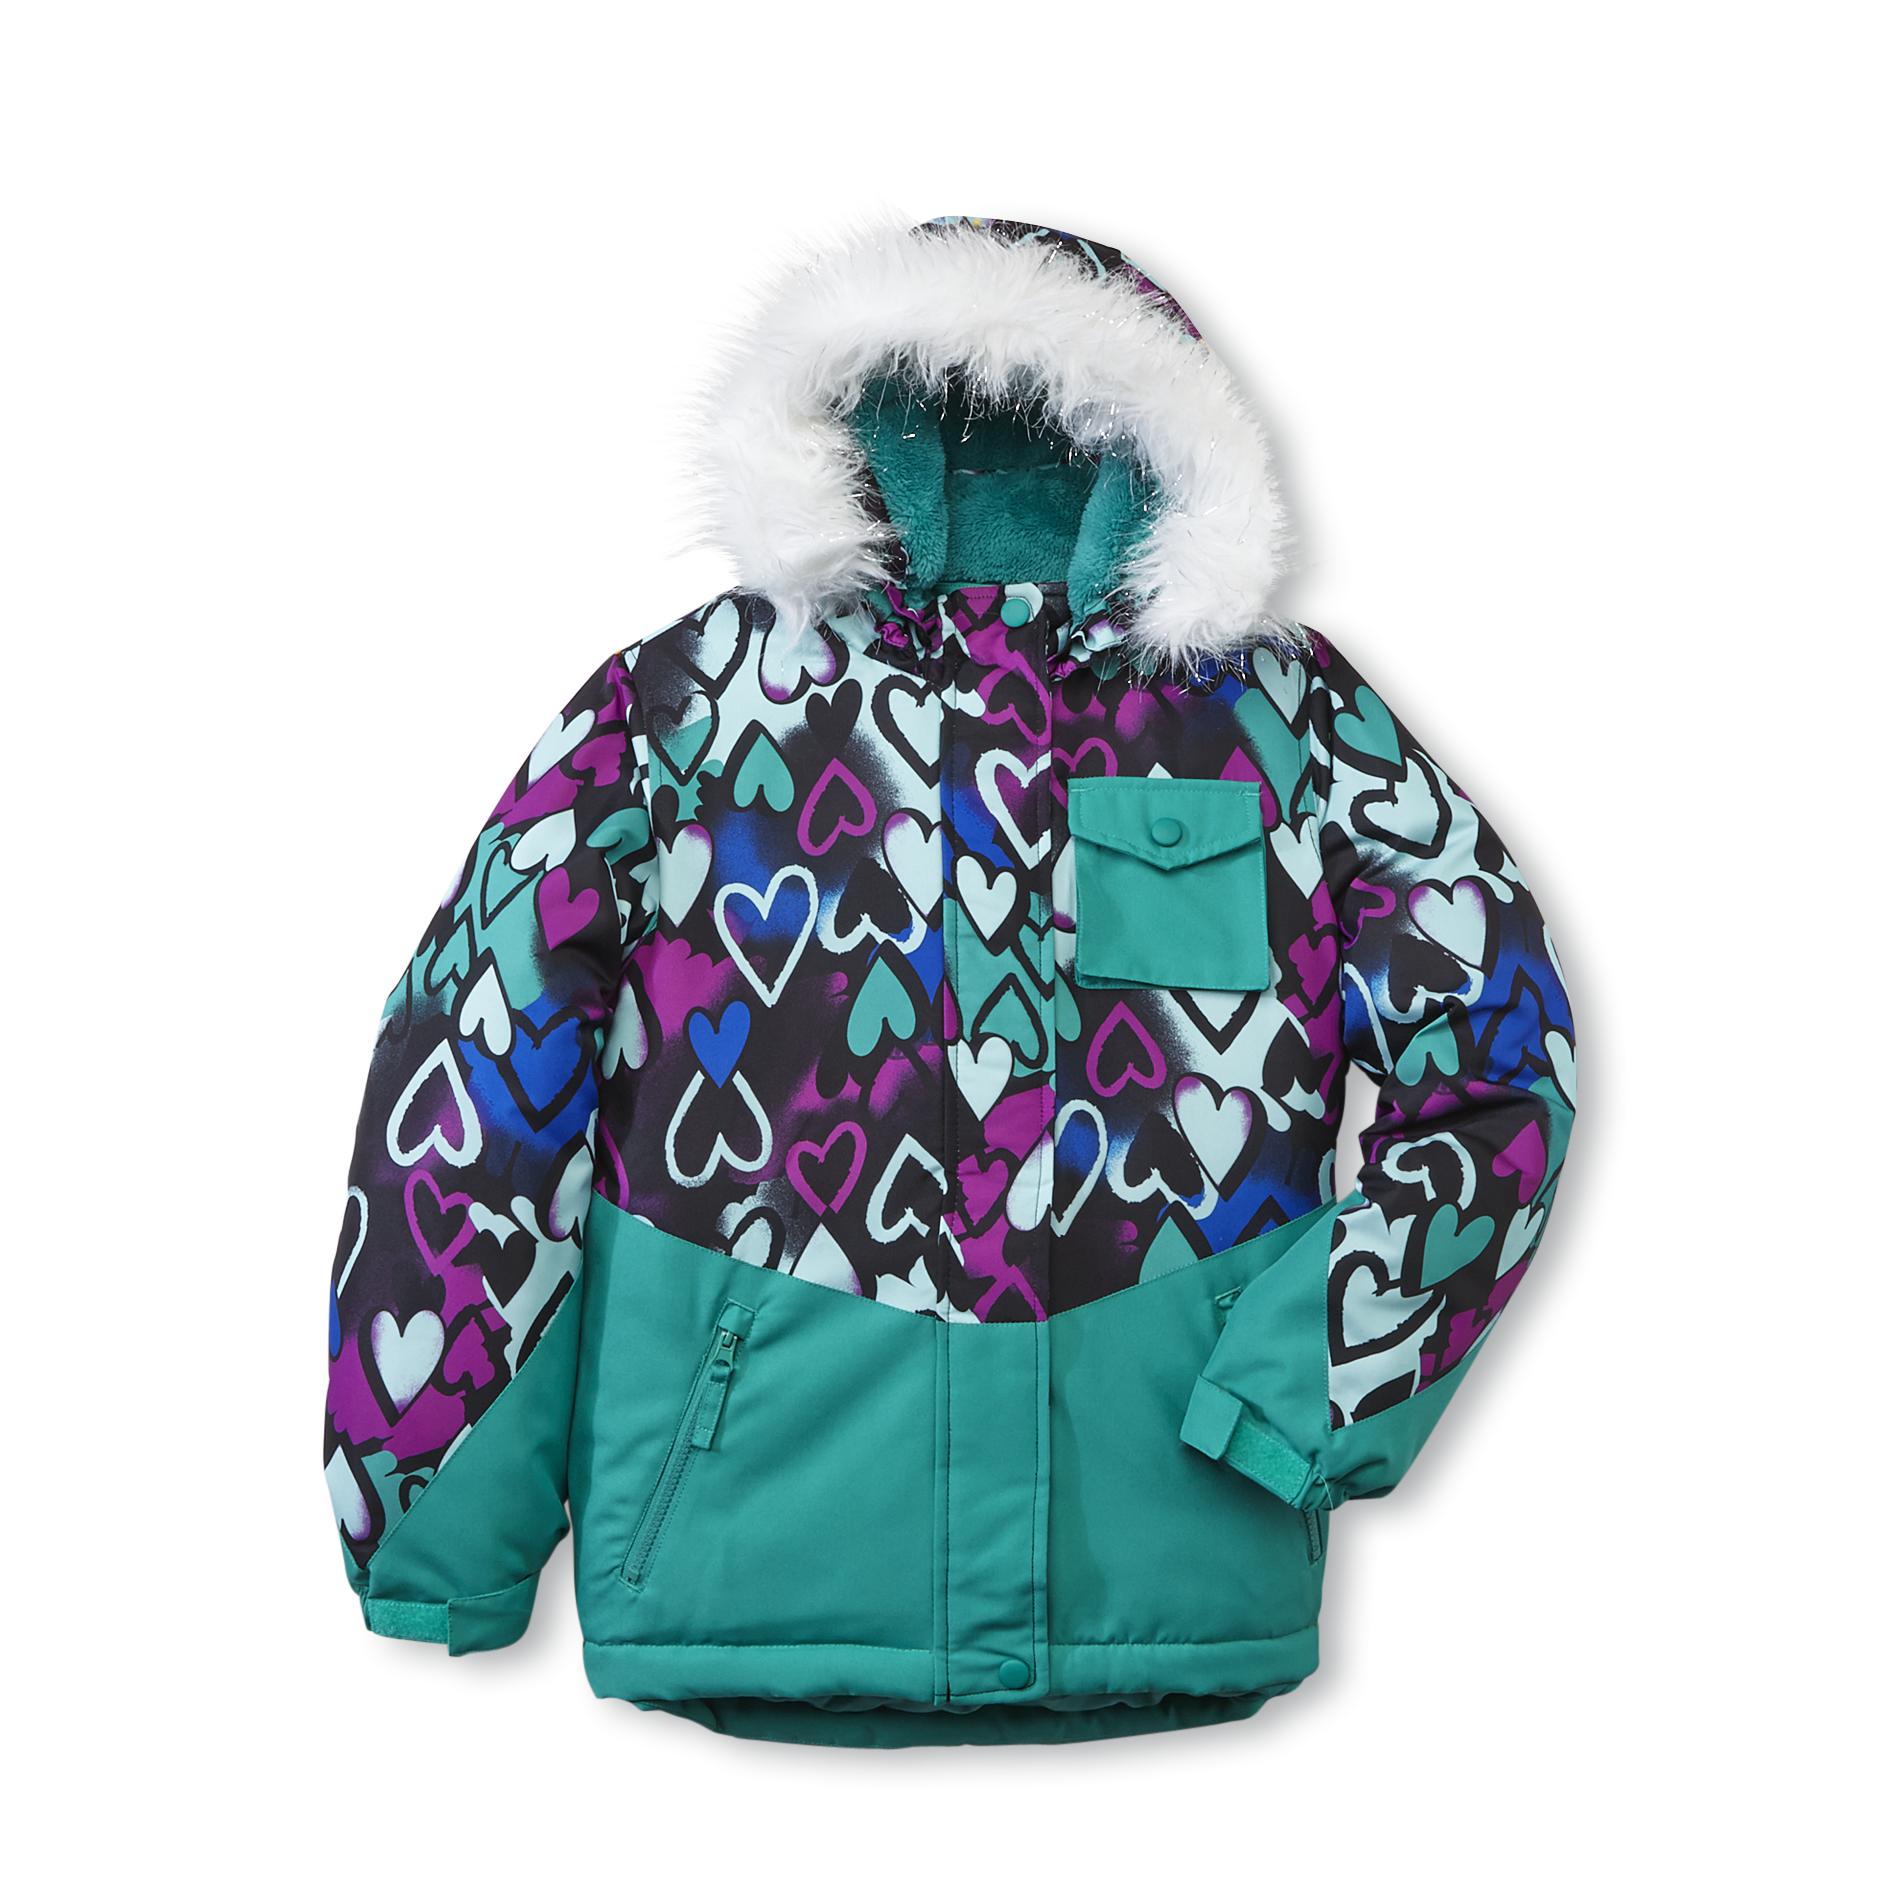 Athletech Girl's Hooded Snowboard Jacket - Heart Print